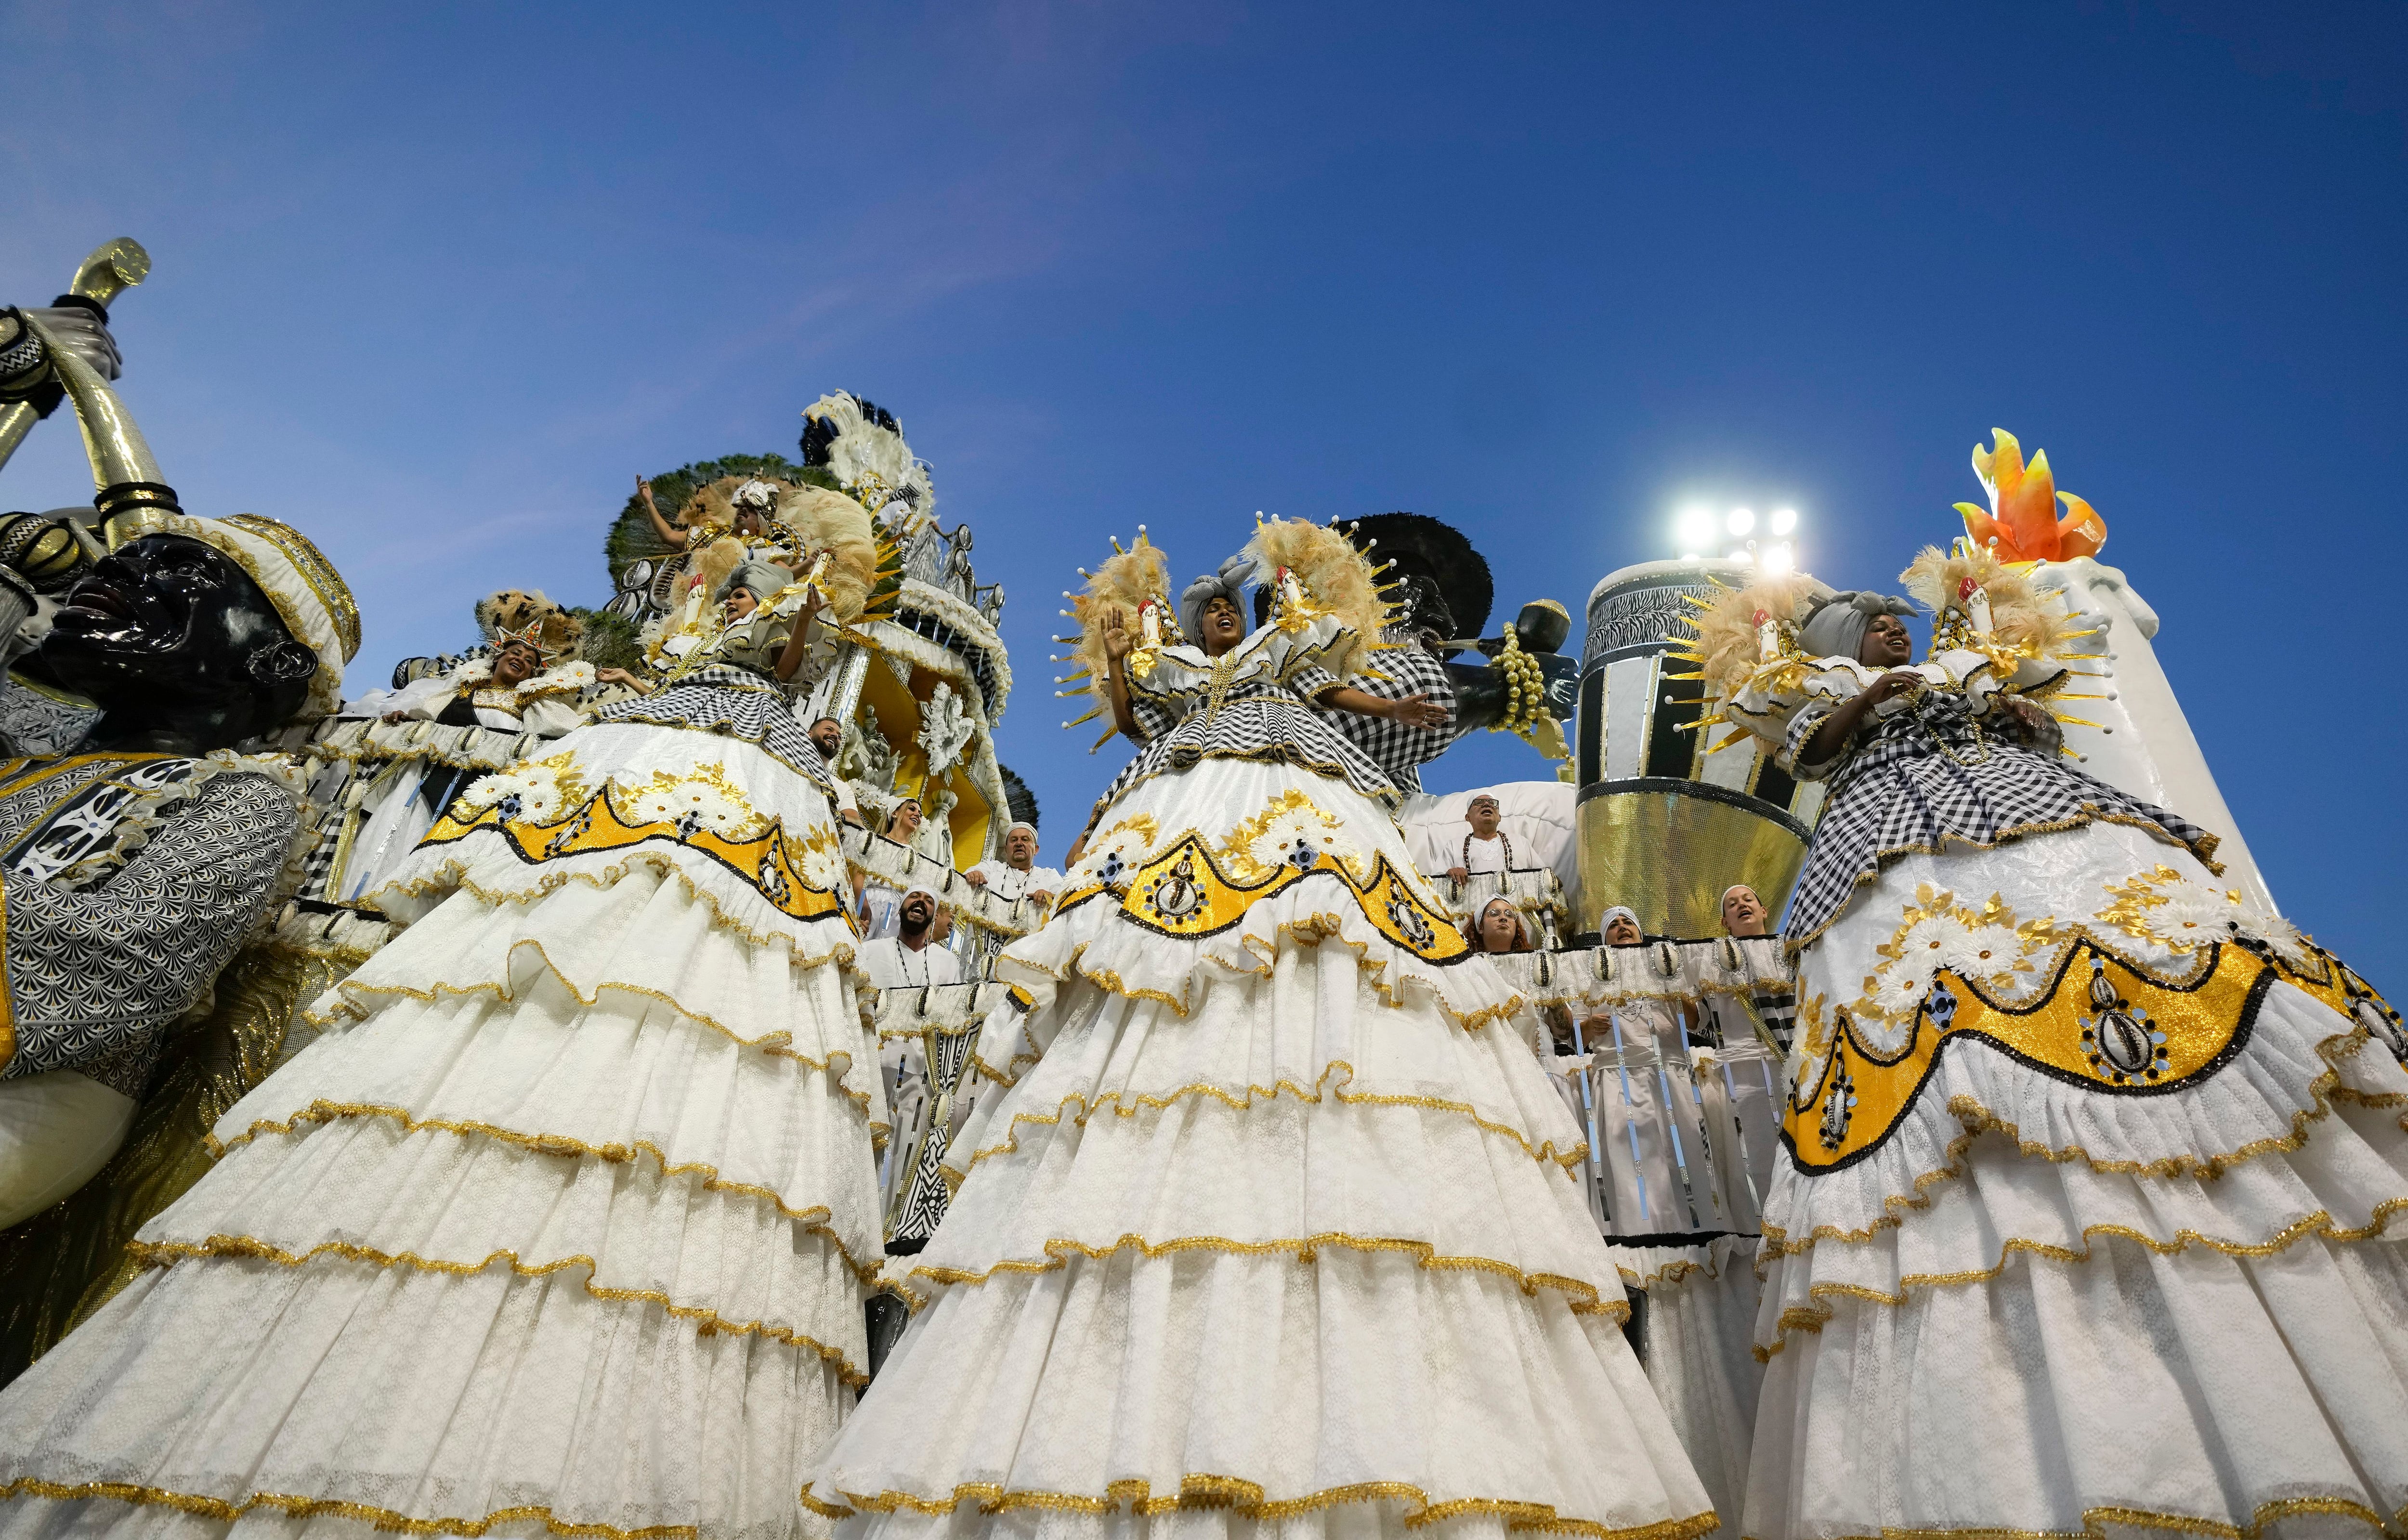 Rio's Carnival parade returns after long pandemic hiatus 